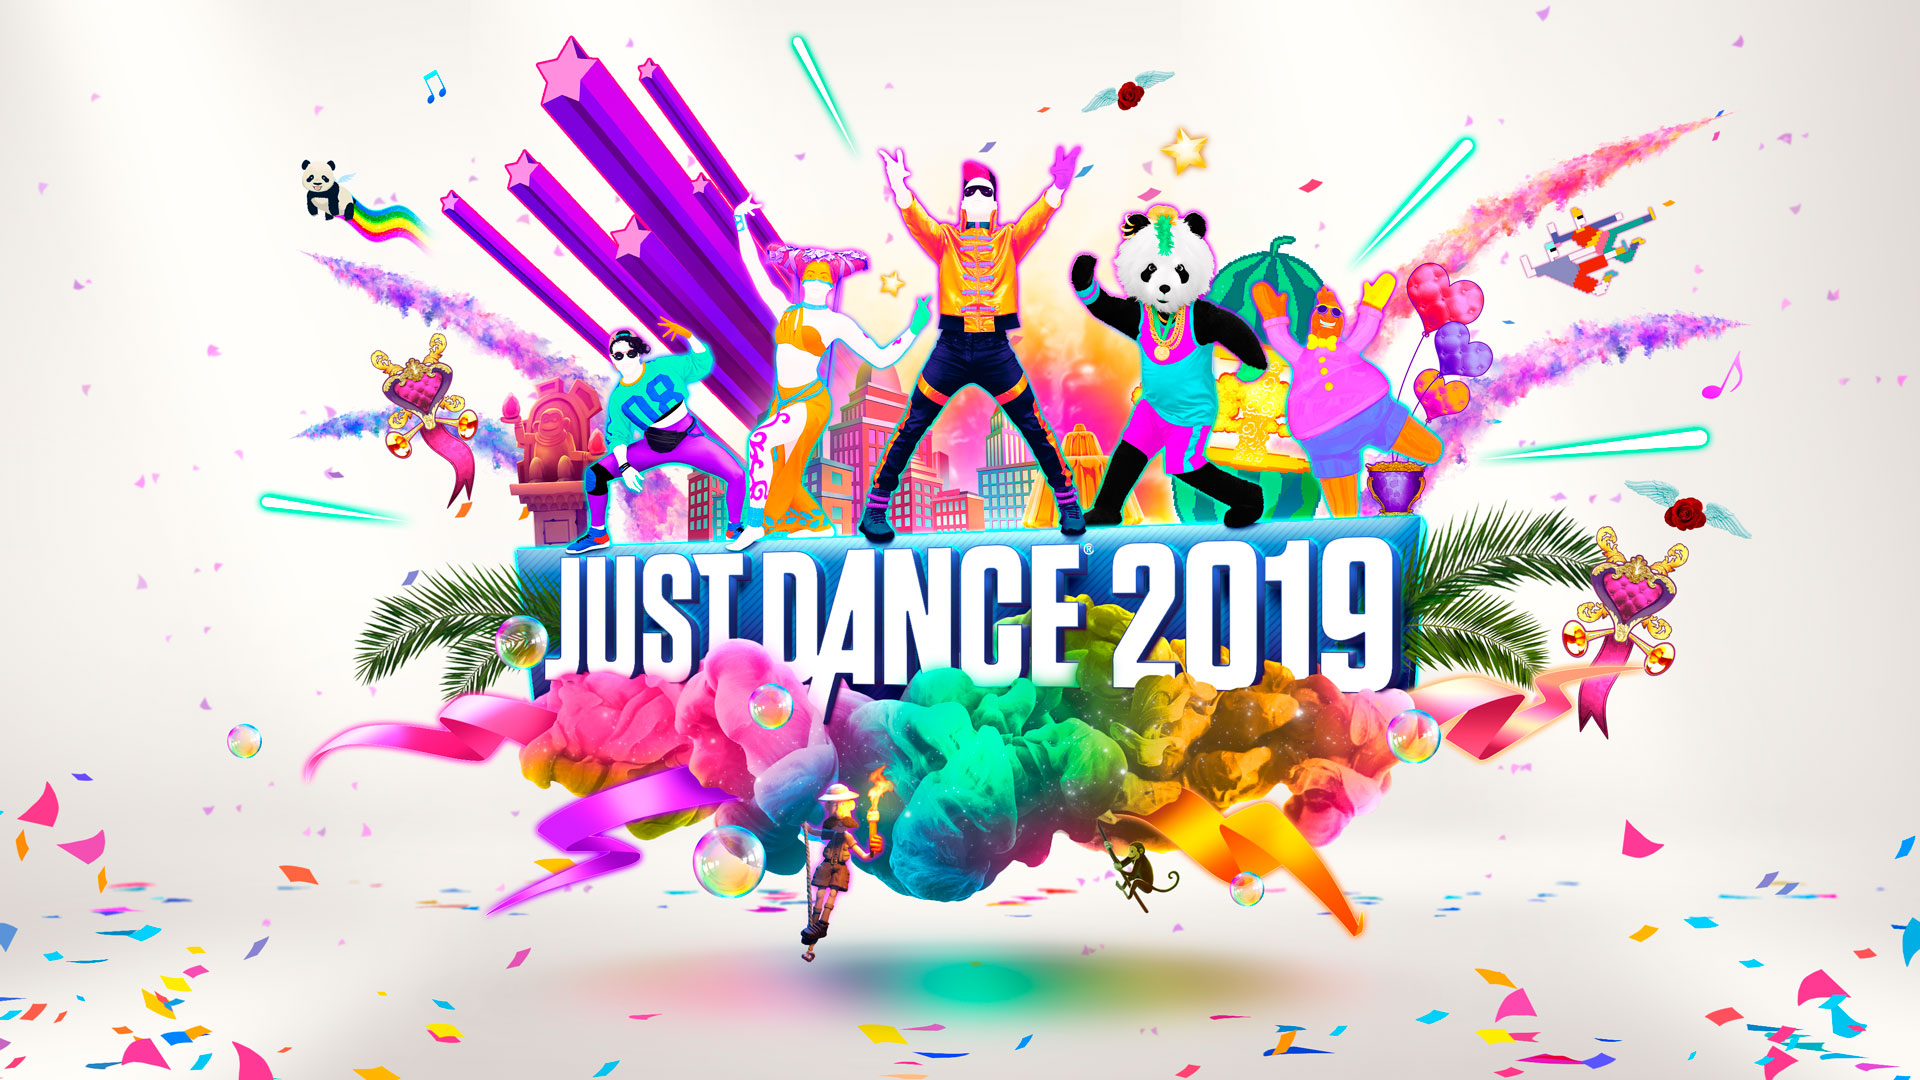 trofeos de Just Dance 2019